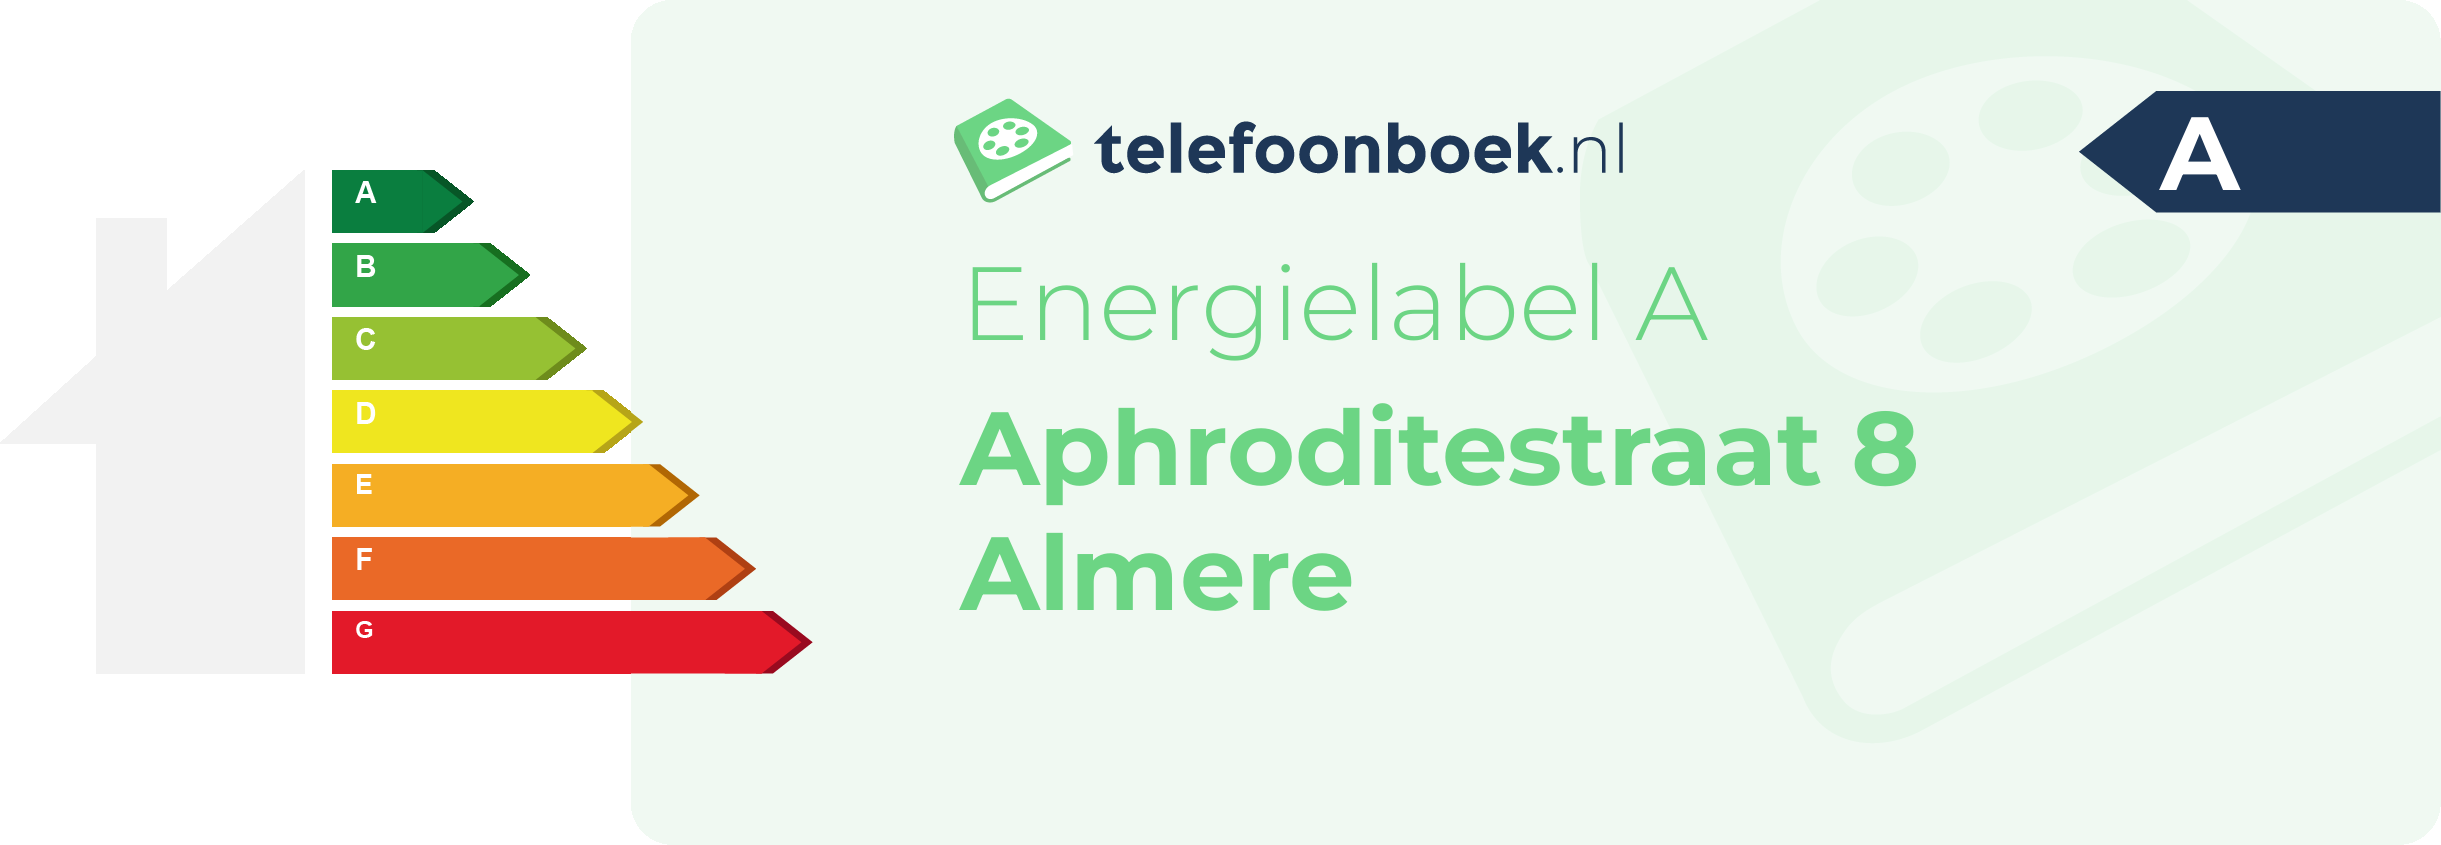 Energielabel Aphroditestraat 8 Almere